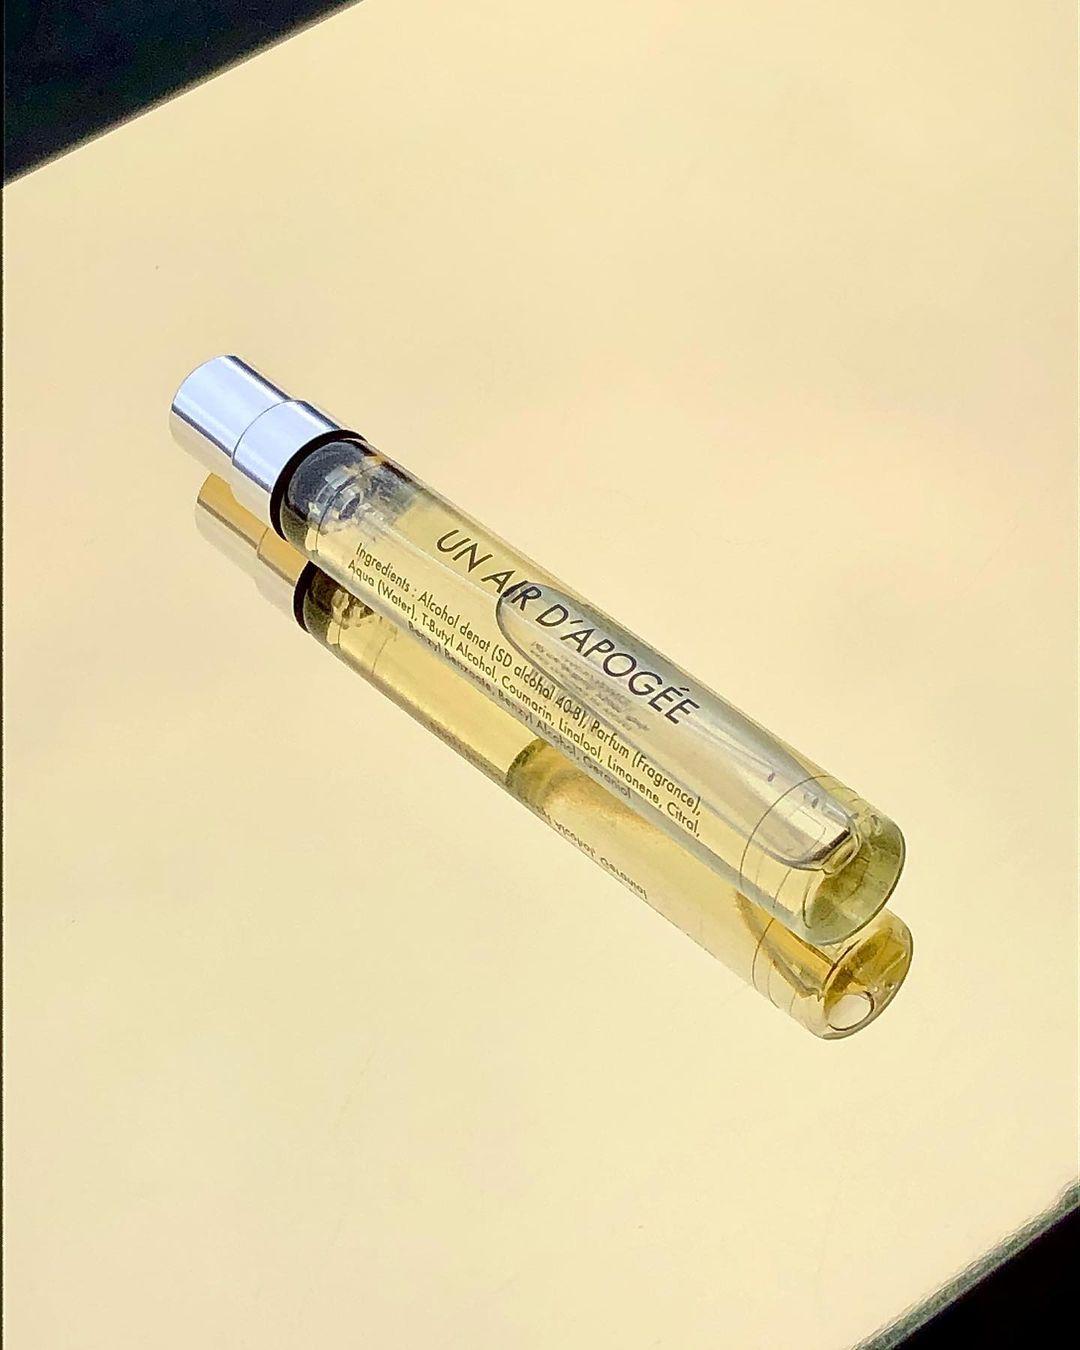 Violet - Un Air d'Apogee 9 ml travel spray | Perfume Lounge